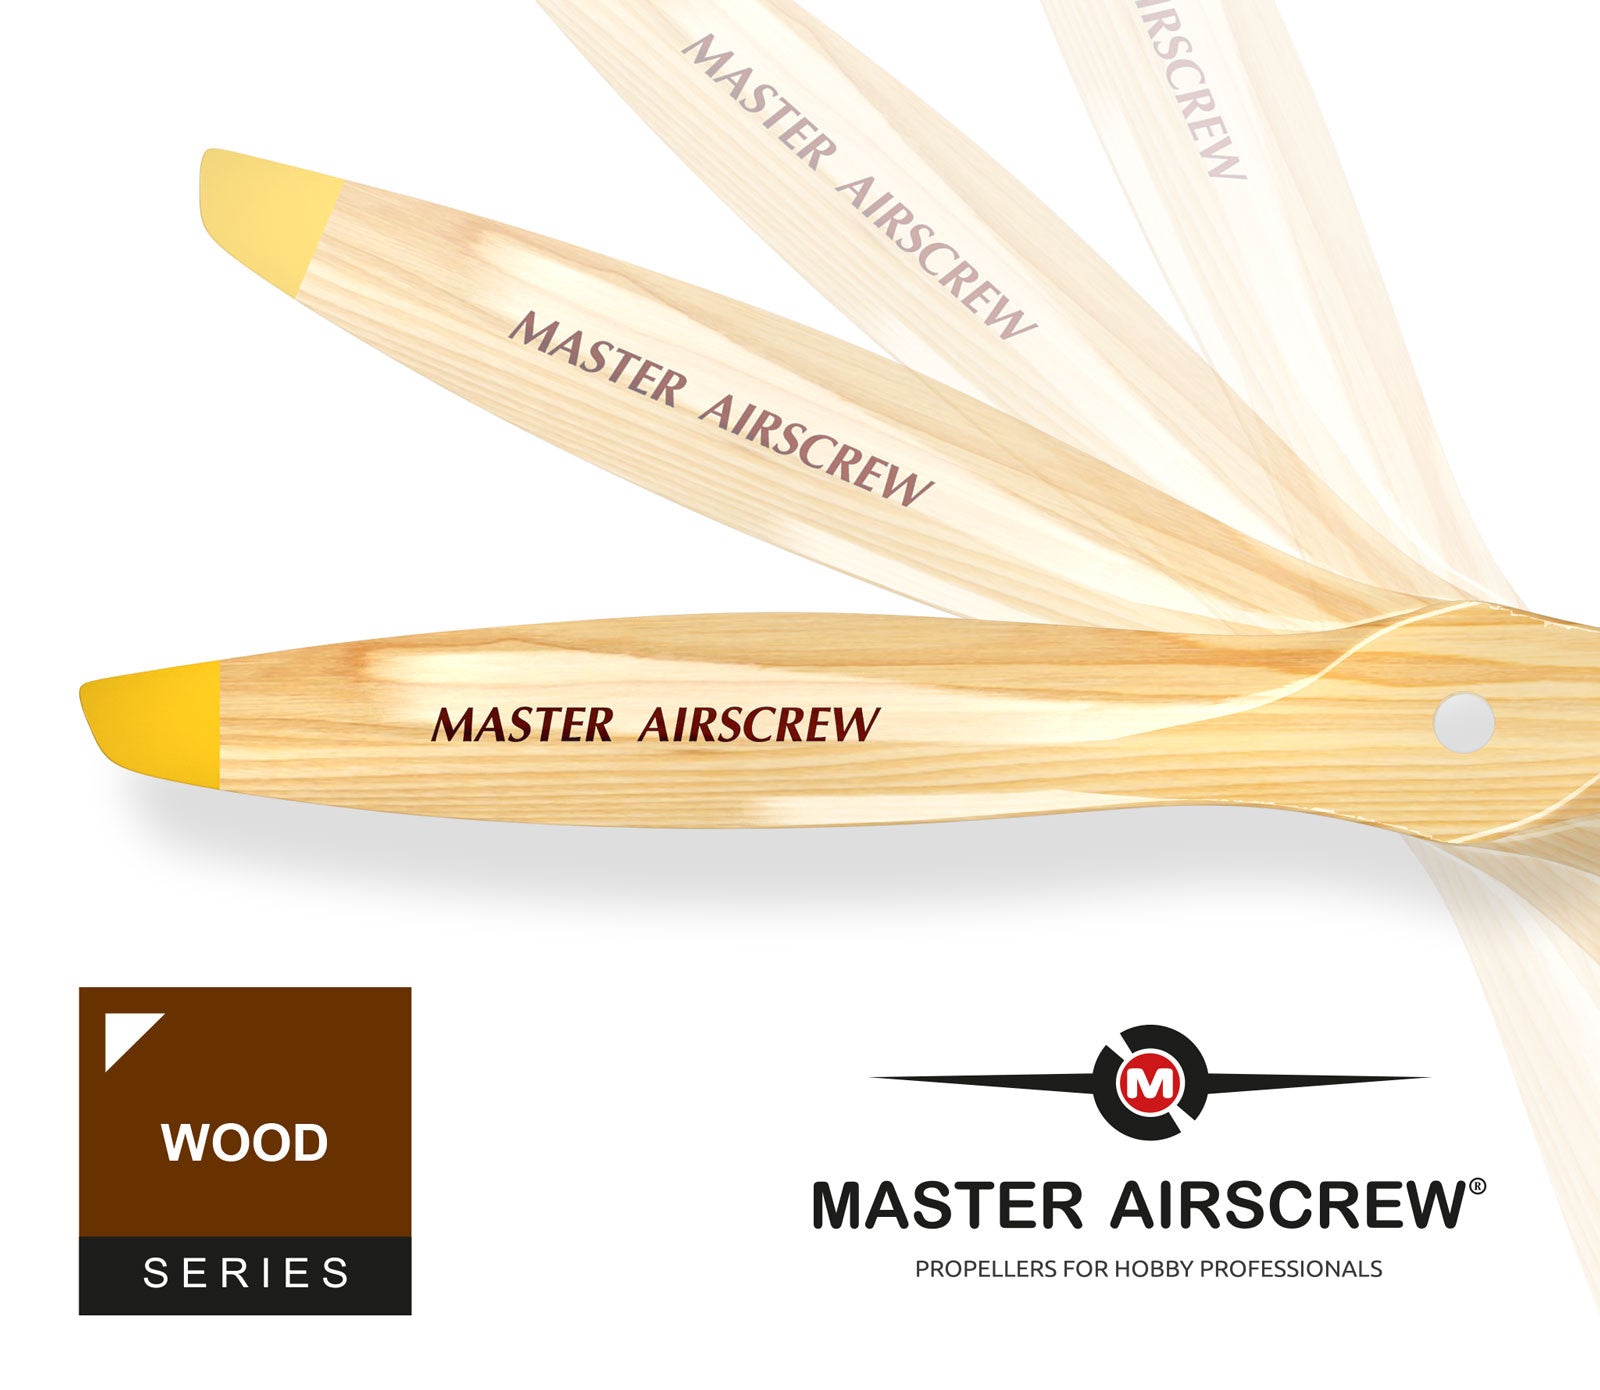 Wood-Maple - 20x10 Propeller - Master Airscrew